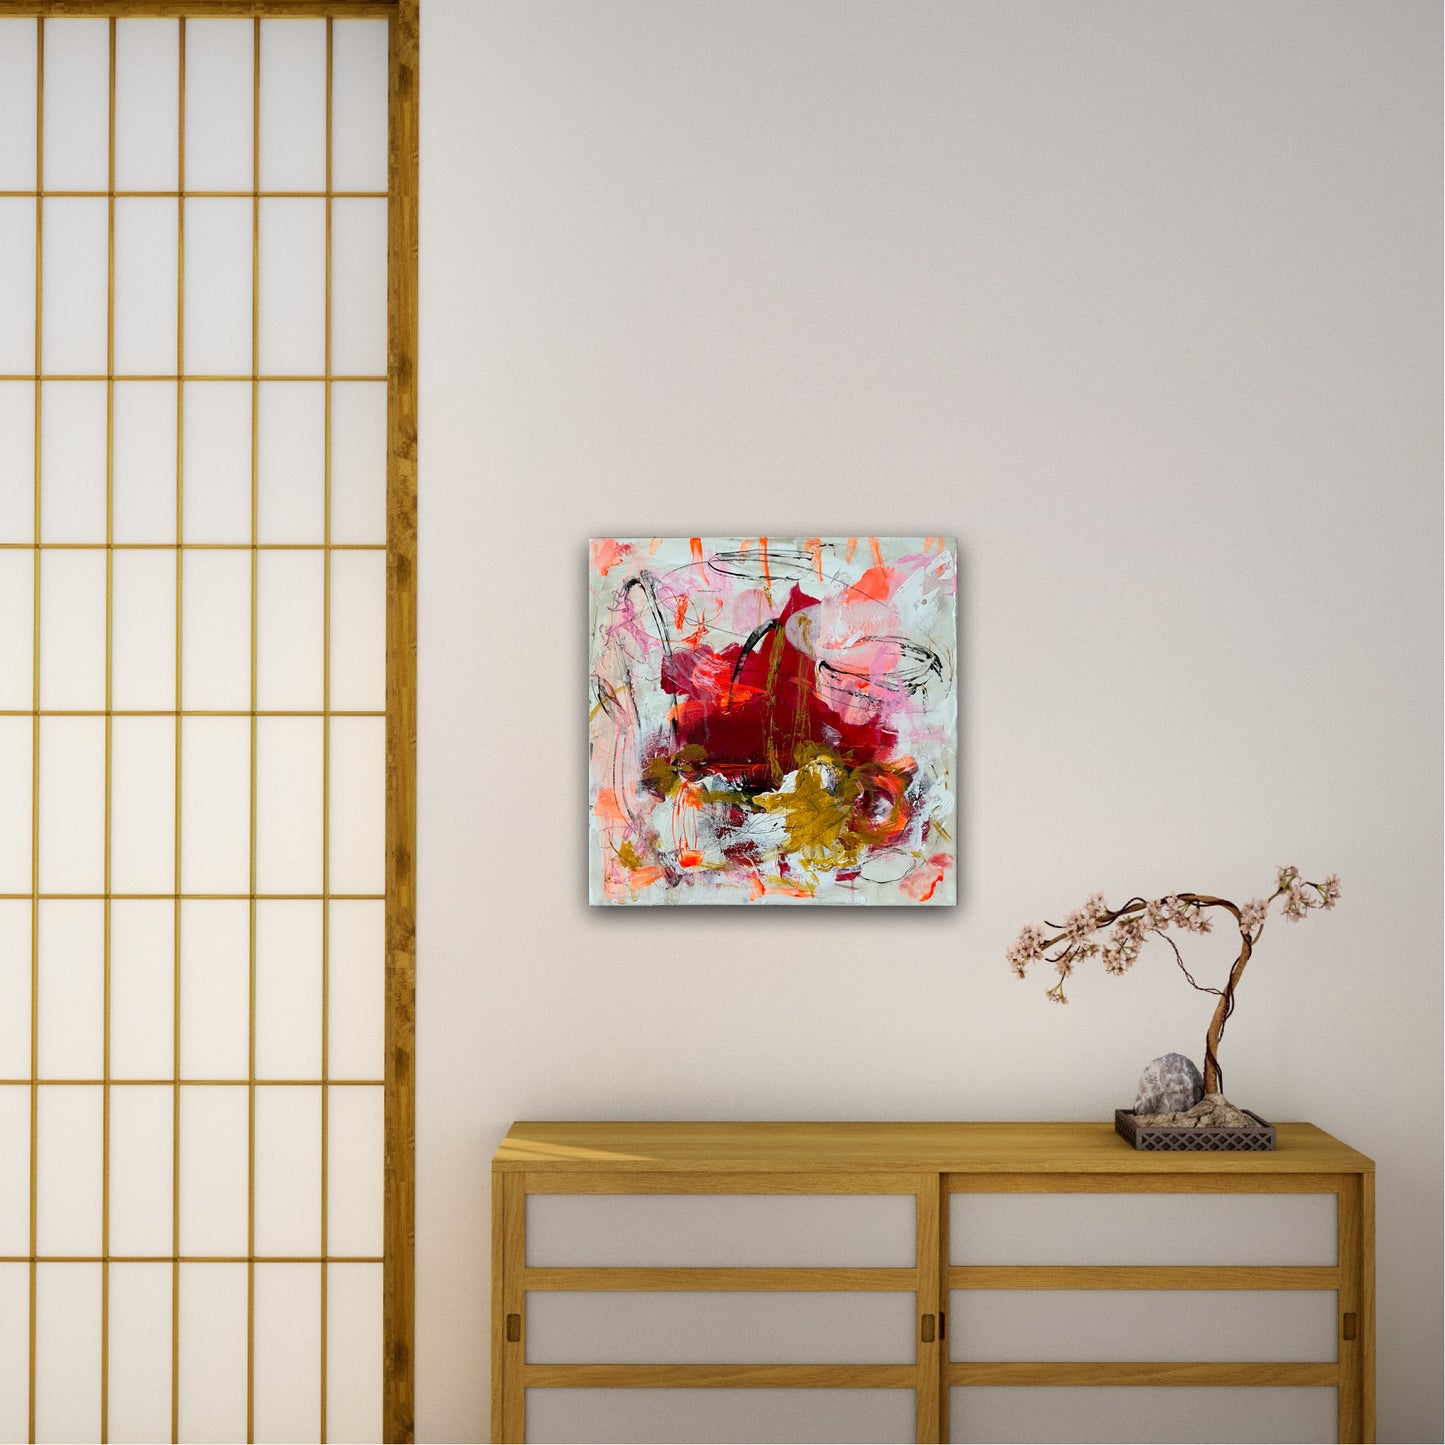 Abstrakt maleri, 40x40 cm, "Livsglæde" by Lone Reedtz , Abstrakt ekspressivt akrylmaleri på lærred Black Ochre Orange Pink Red Square White